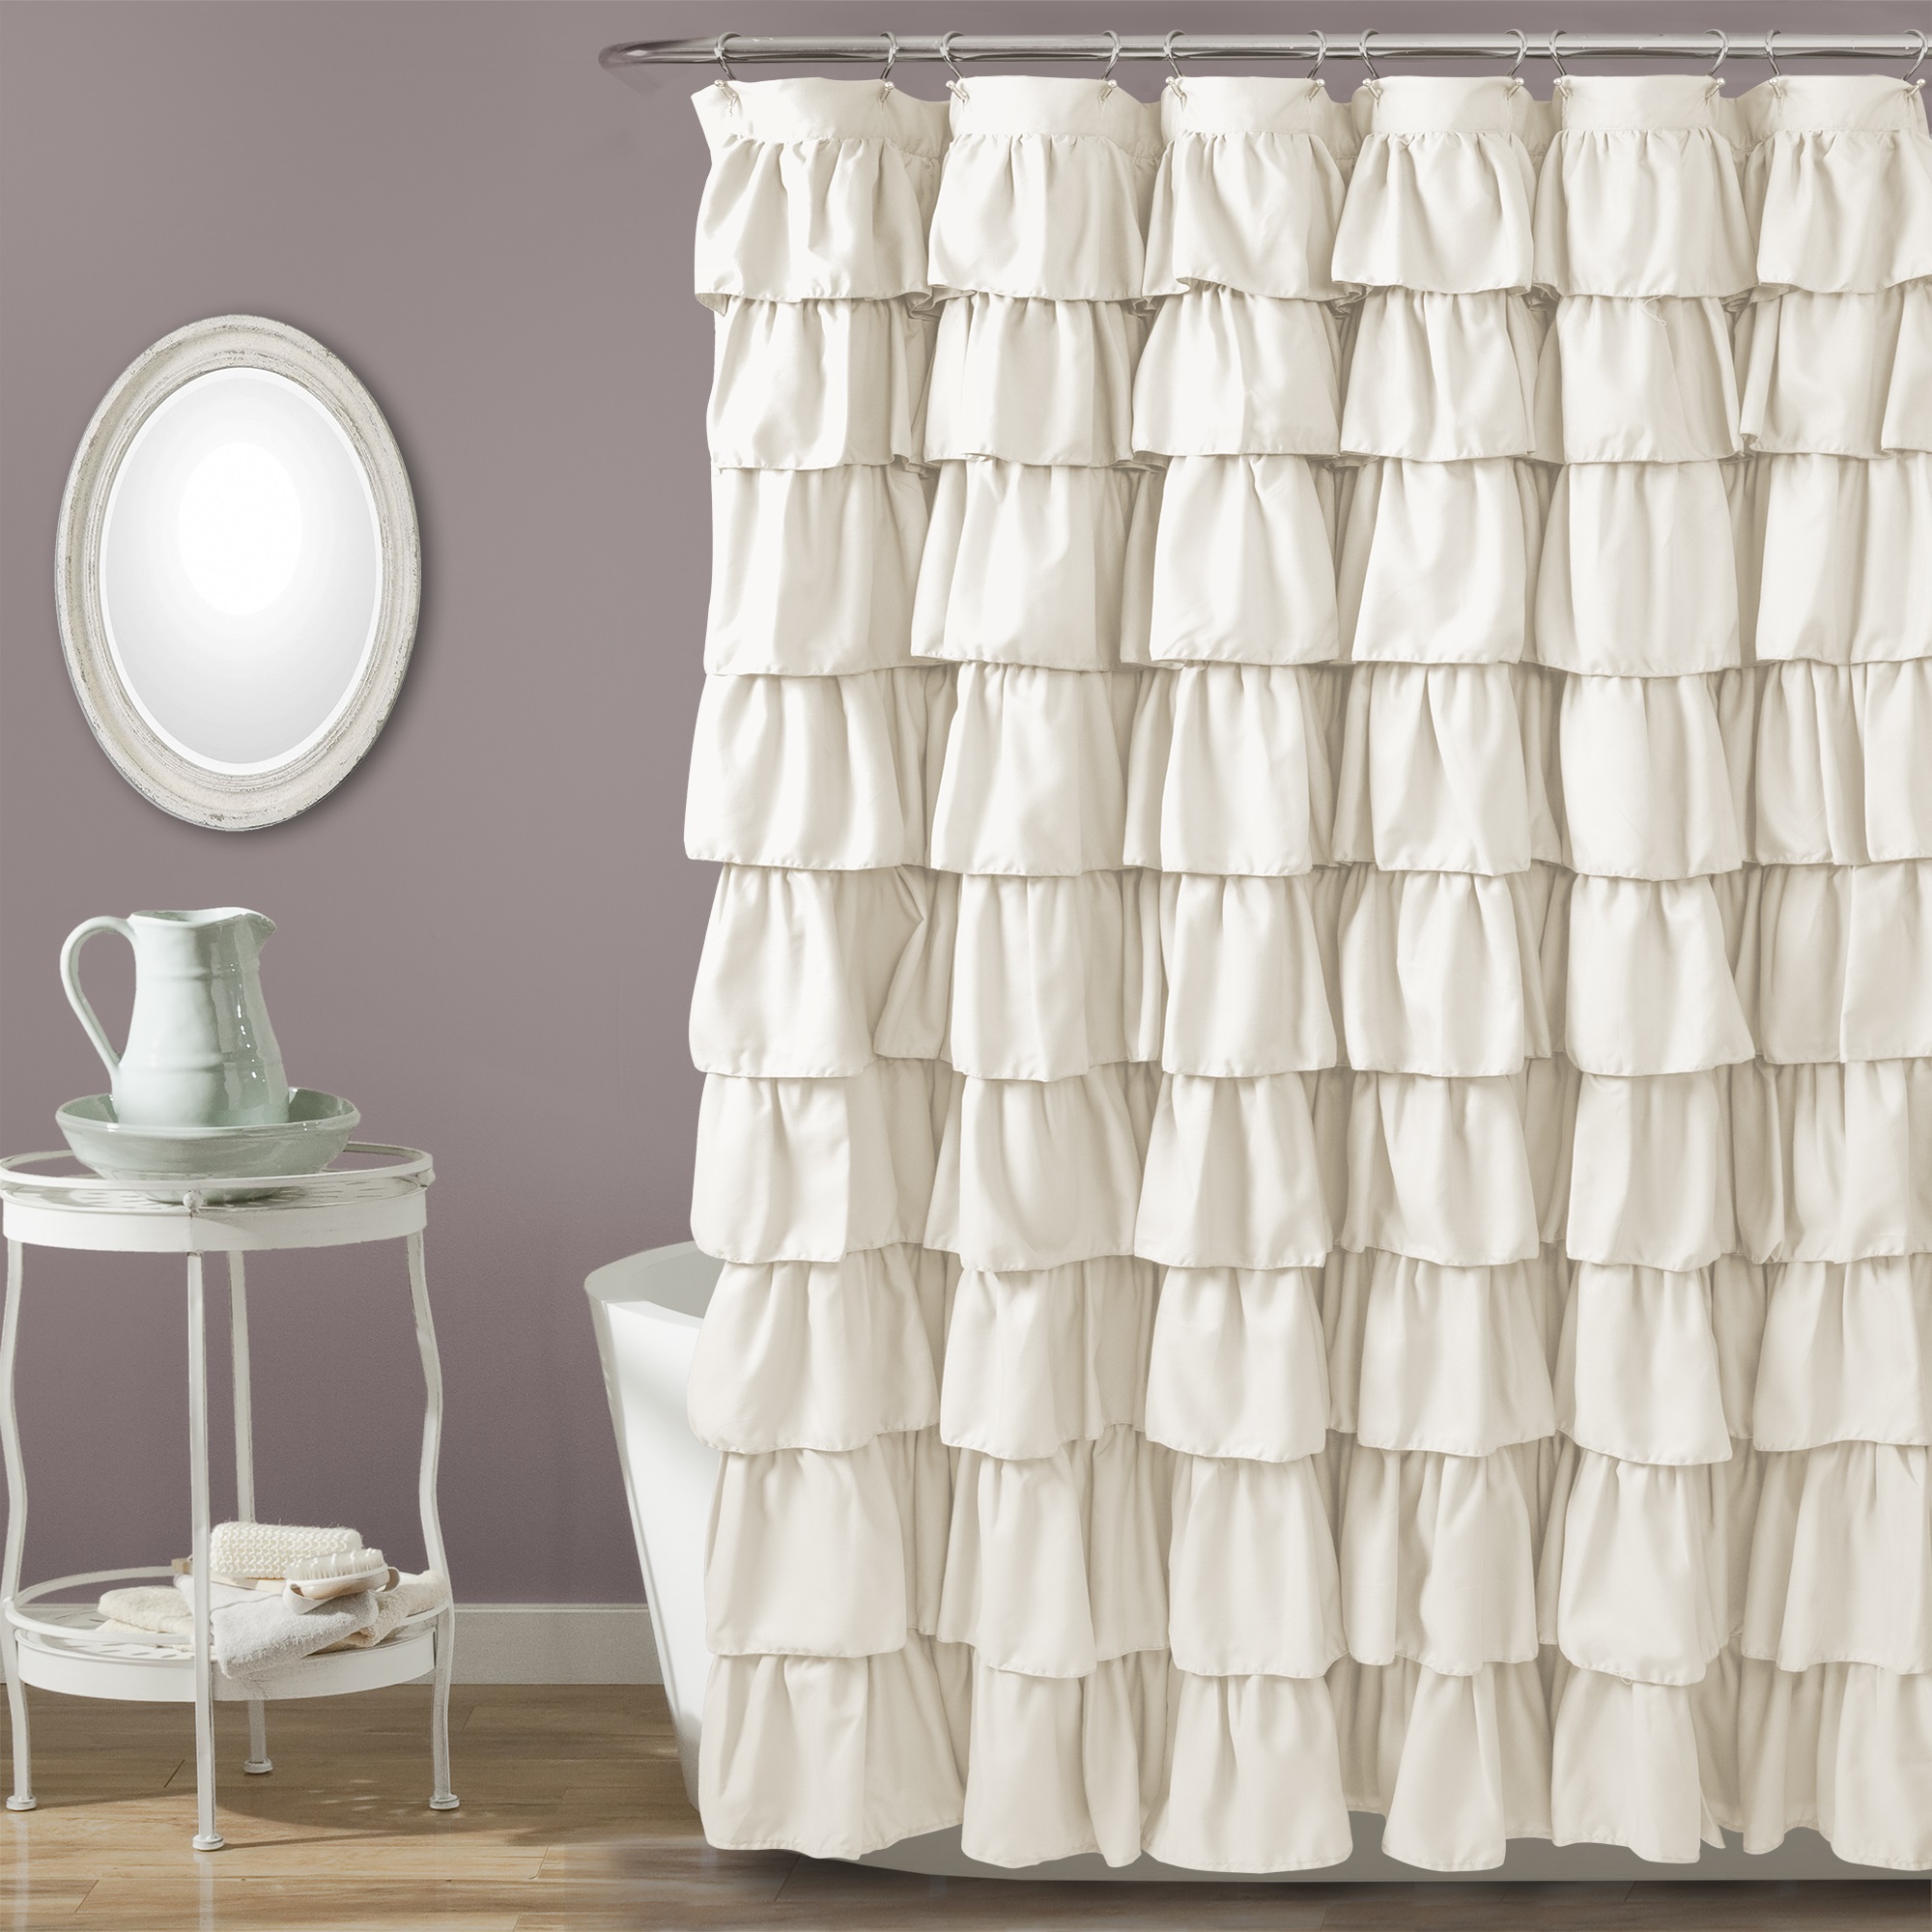 Lush Decor Ruffle Shower Curtain Ivory 72x72